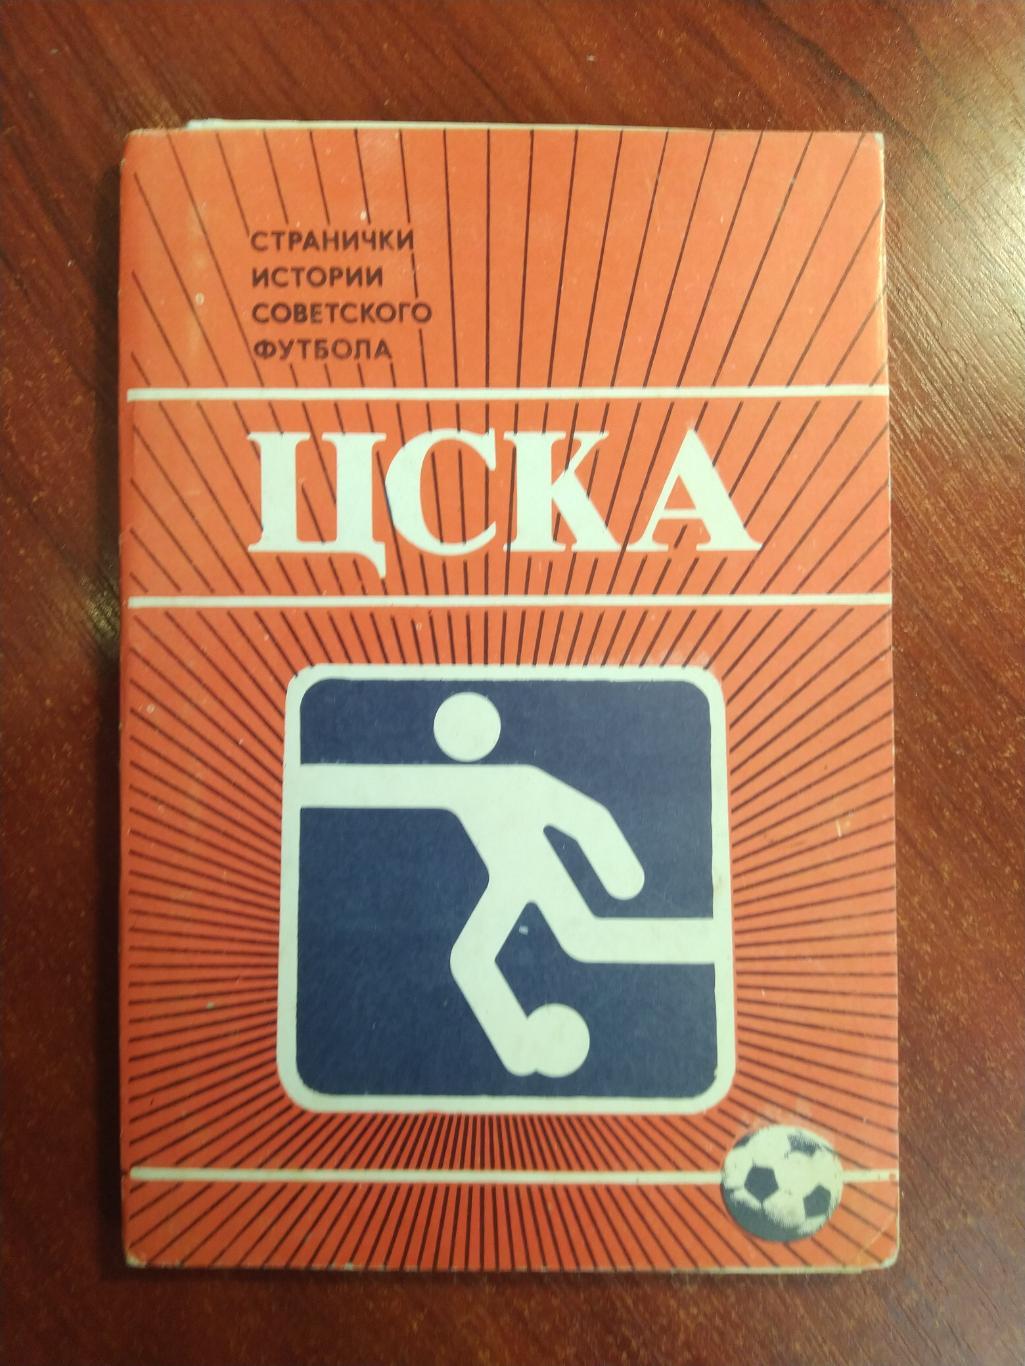 Набор открыток ЦСКА Странички истории советского футбола